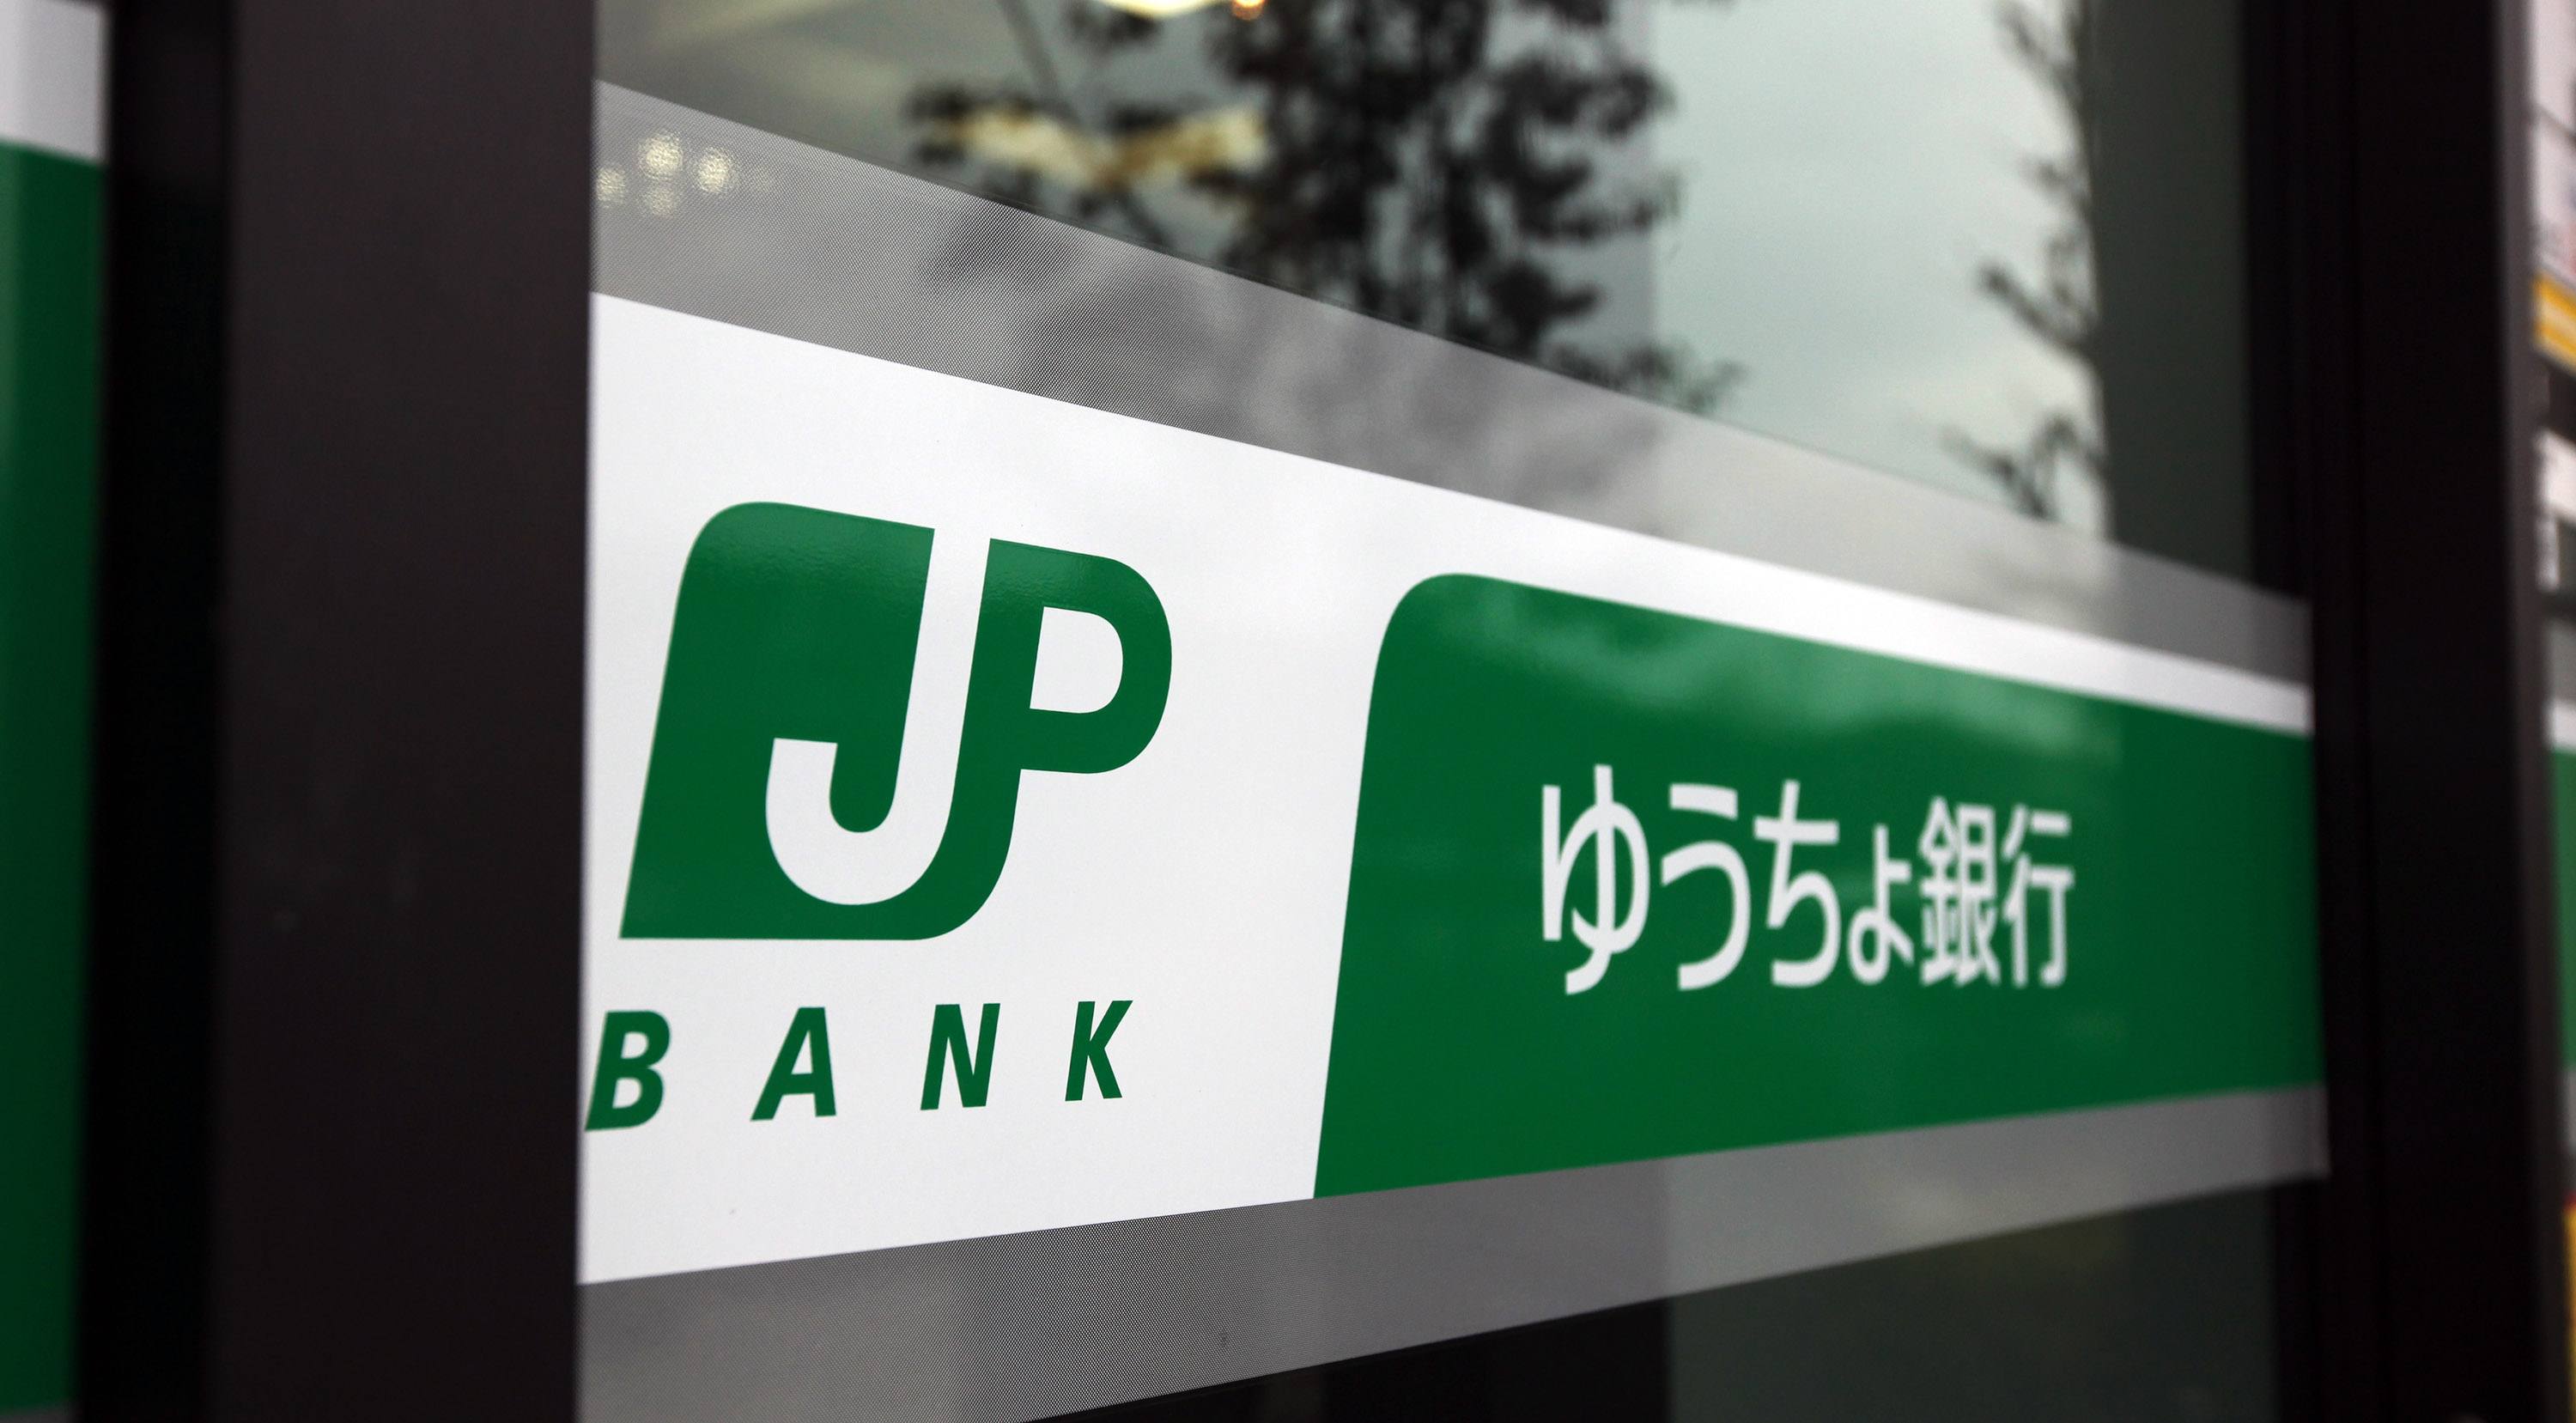 Jp bank